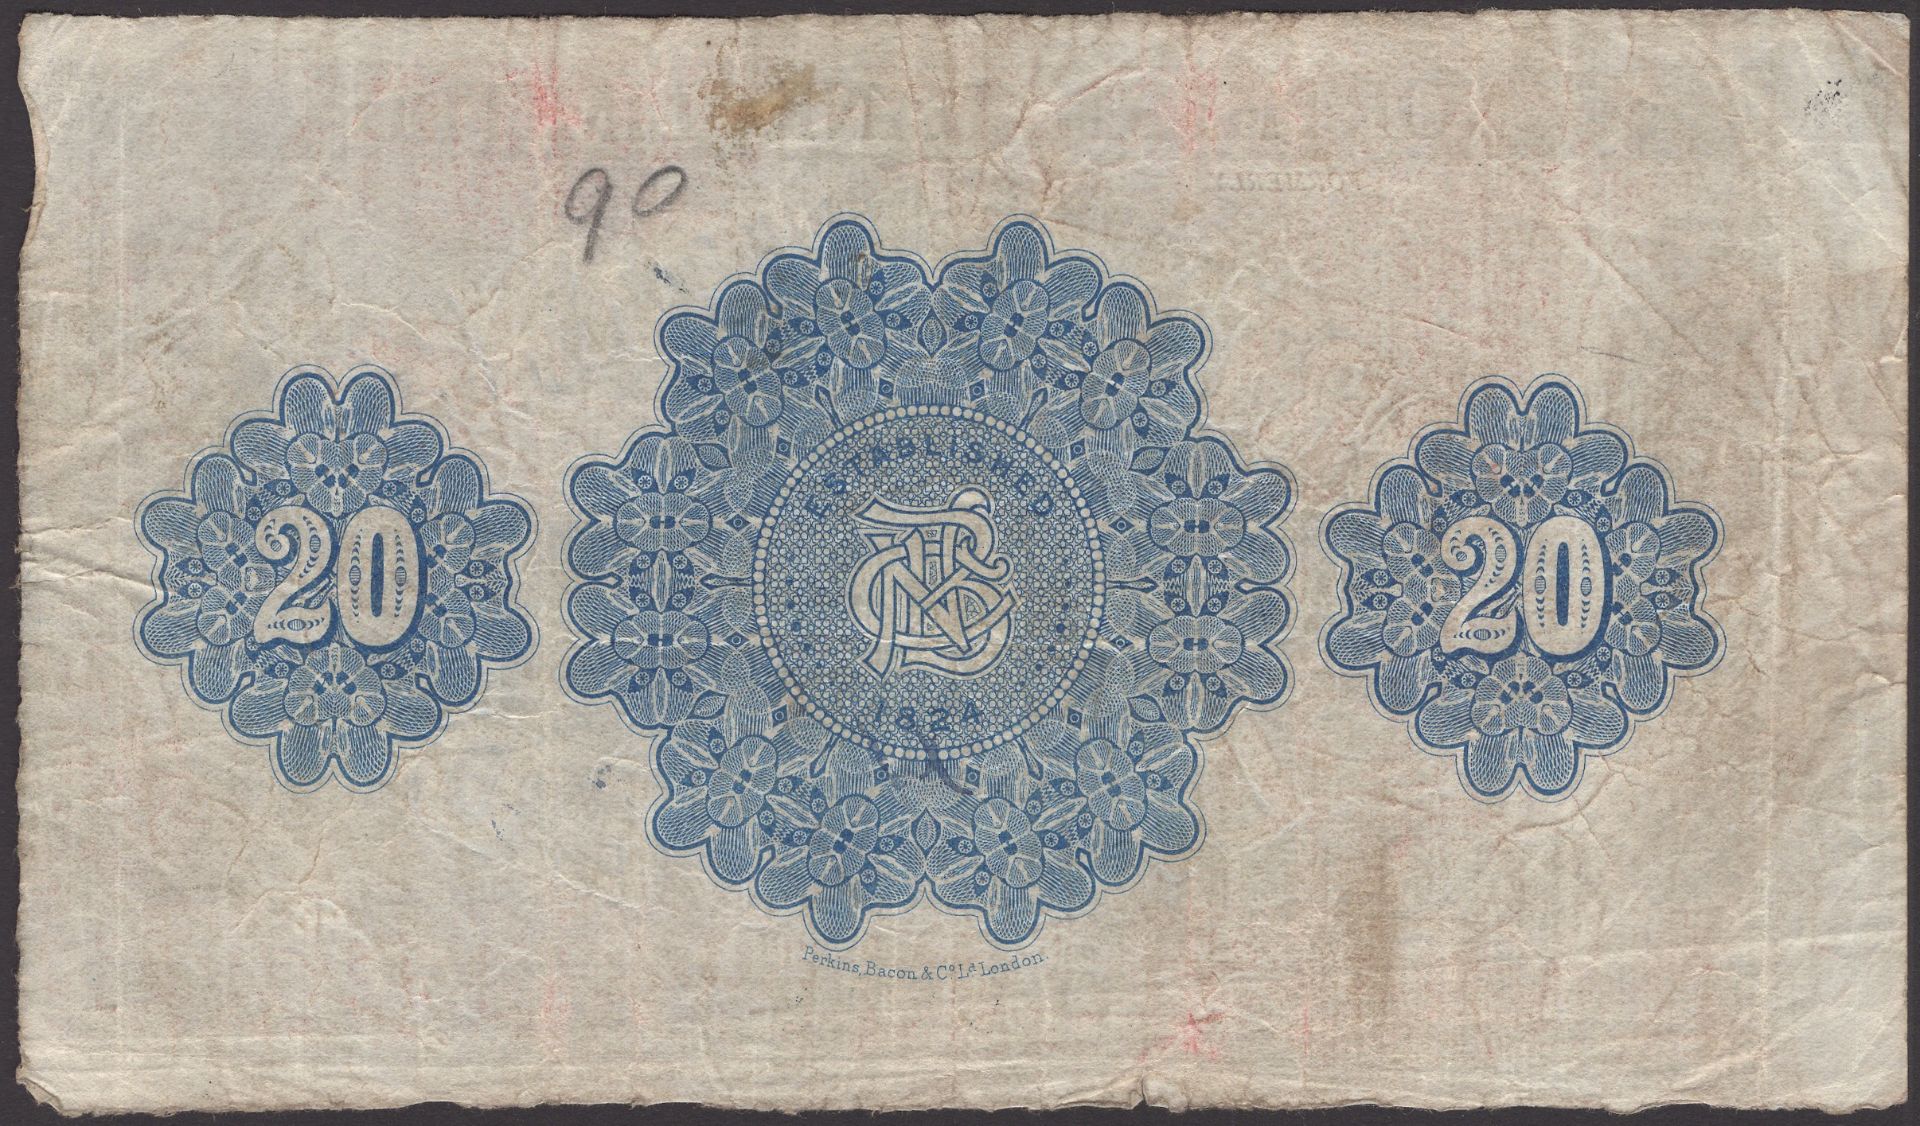 Northern Bank Limited, Â£20, 20 October 1921 (1929), serial number A2263, Craig signature, la... - Image 2 of 2